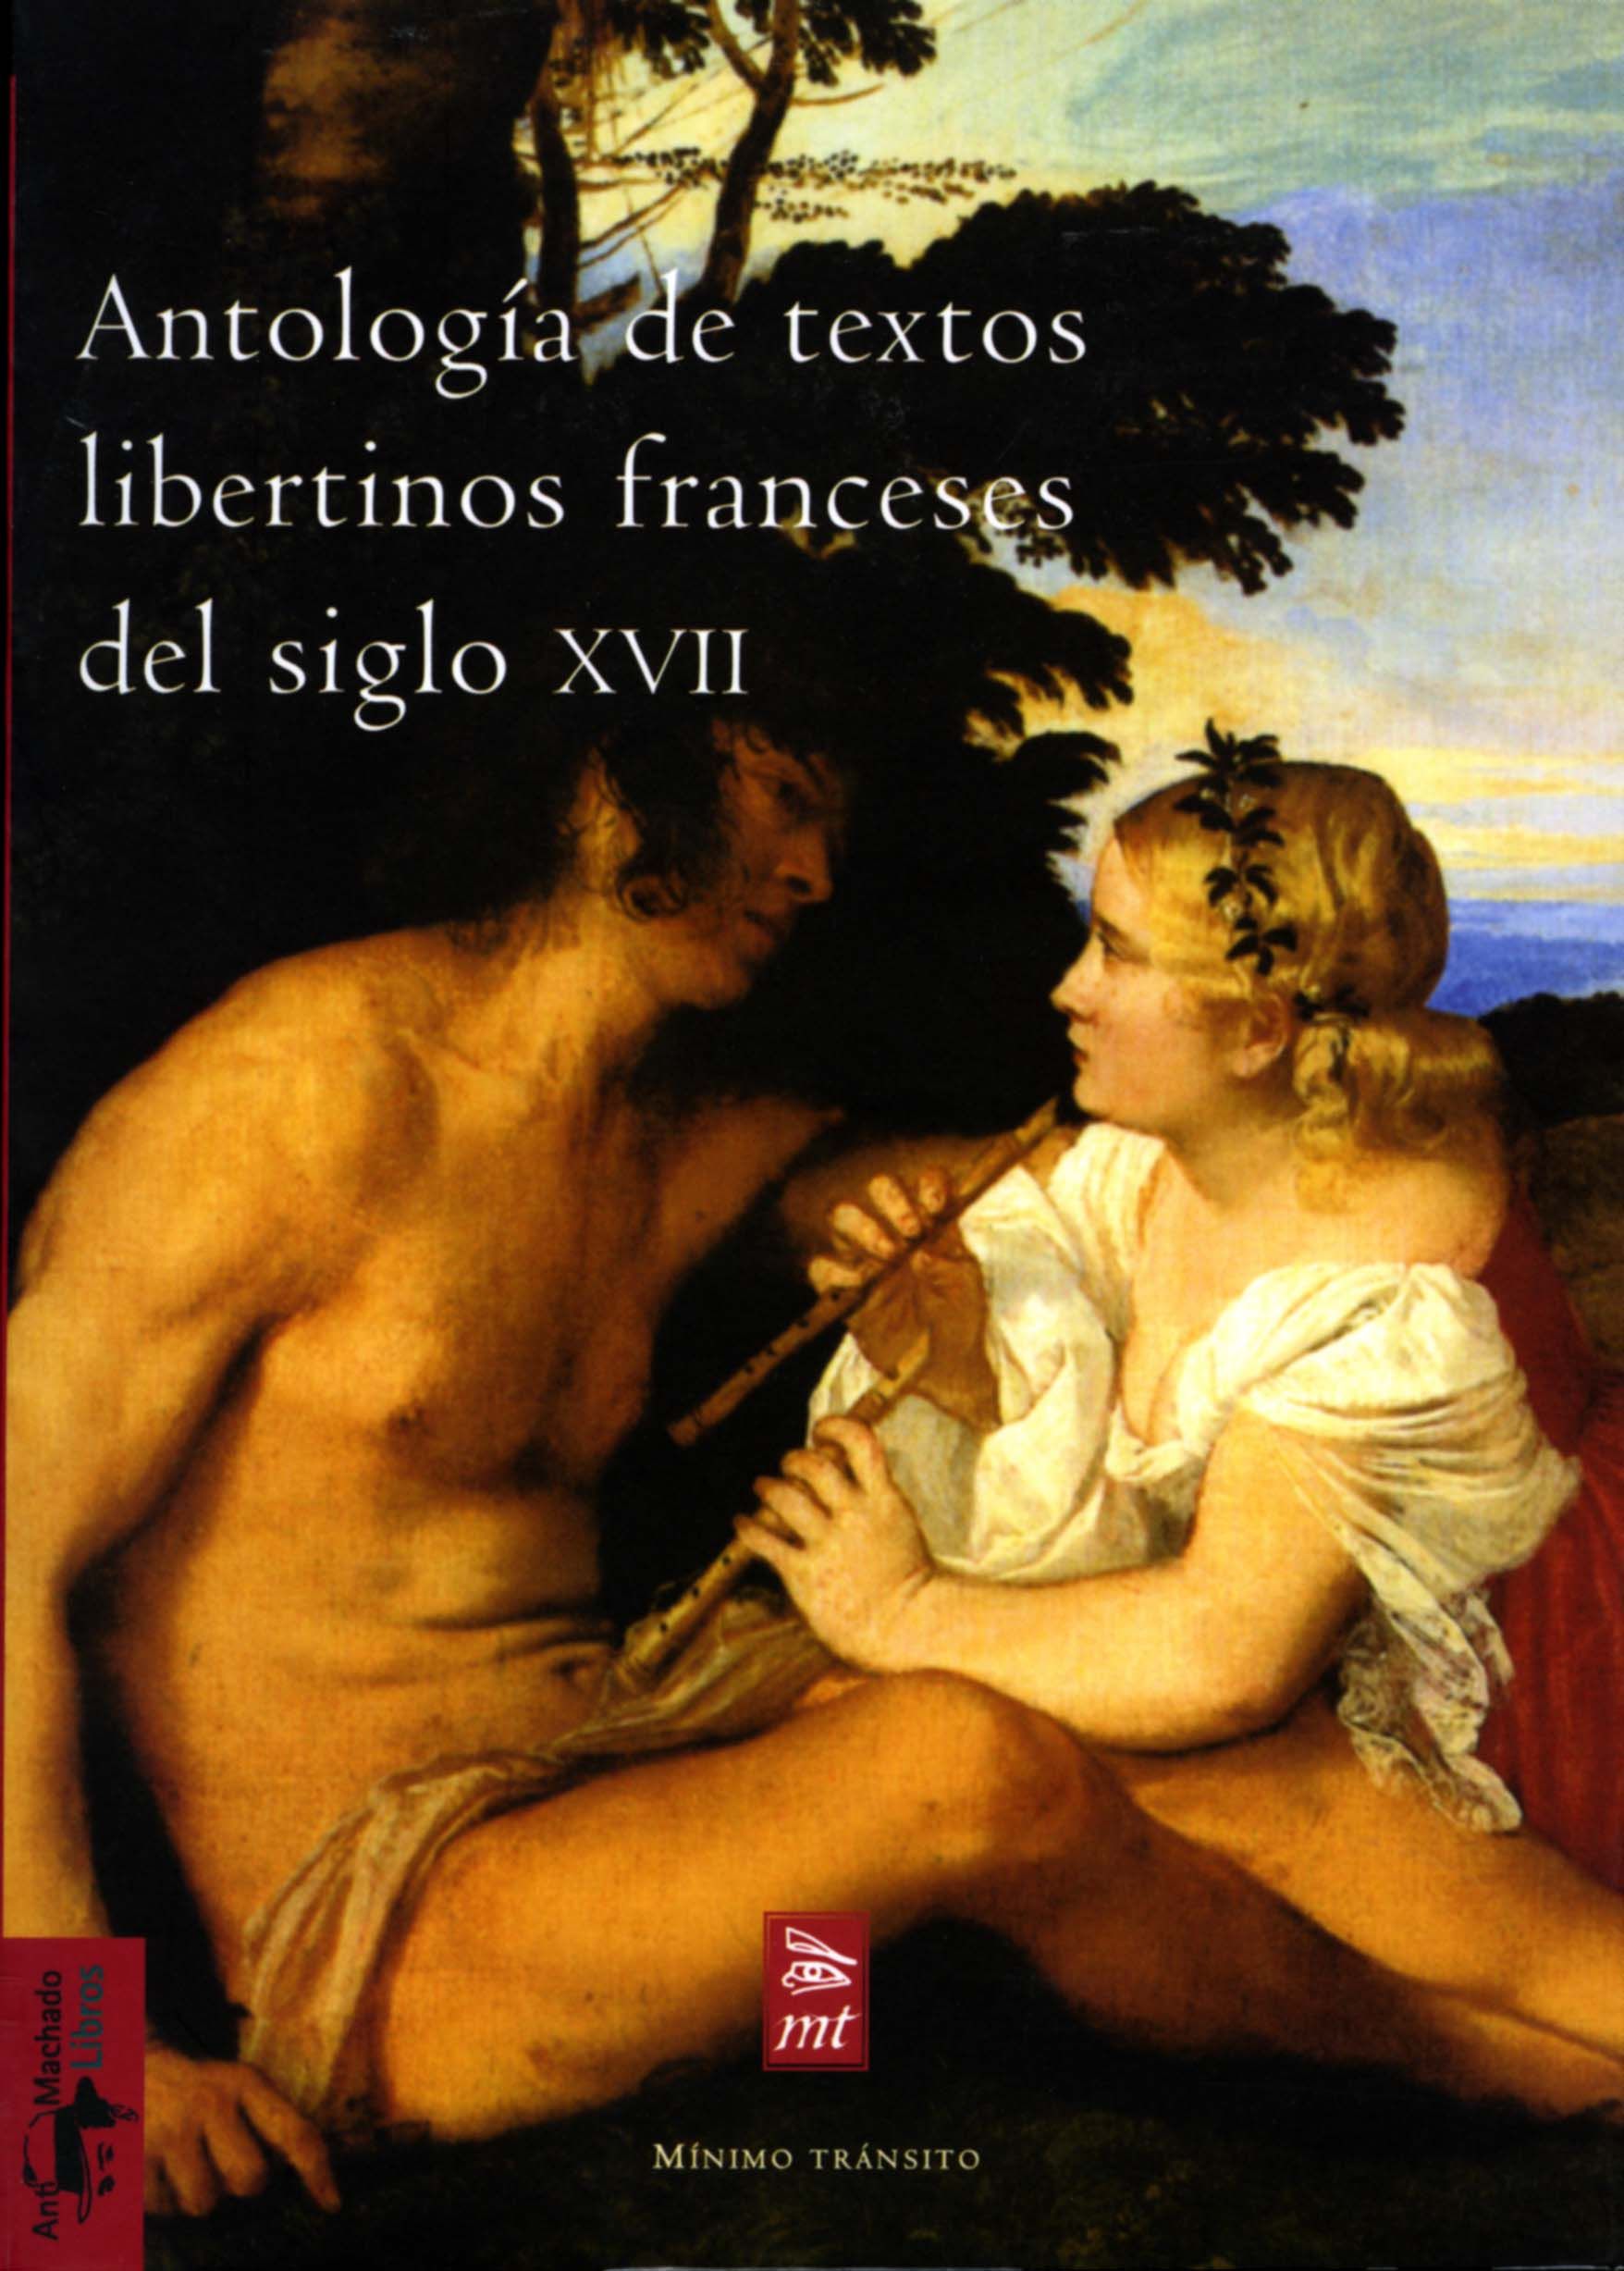 ANTOLOGÍA DE TEXTOS LIBERTINOS FRANCESES DEL SIGLO XVII